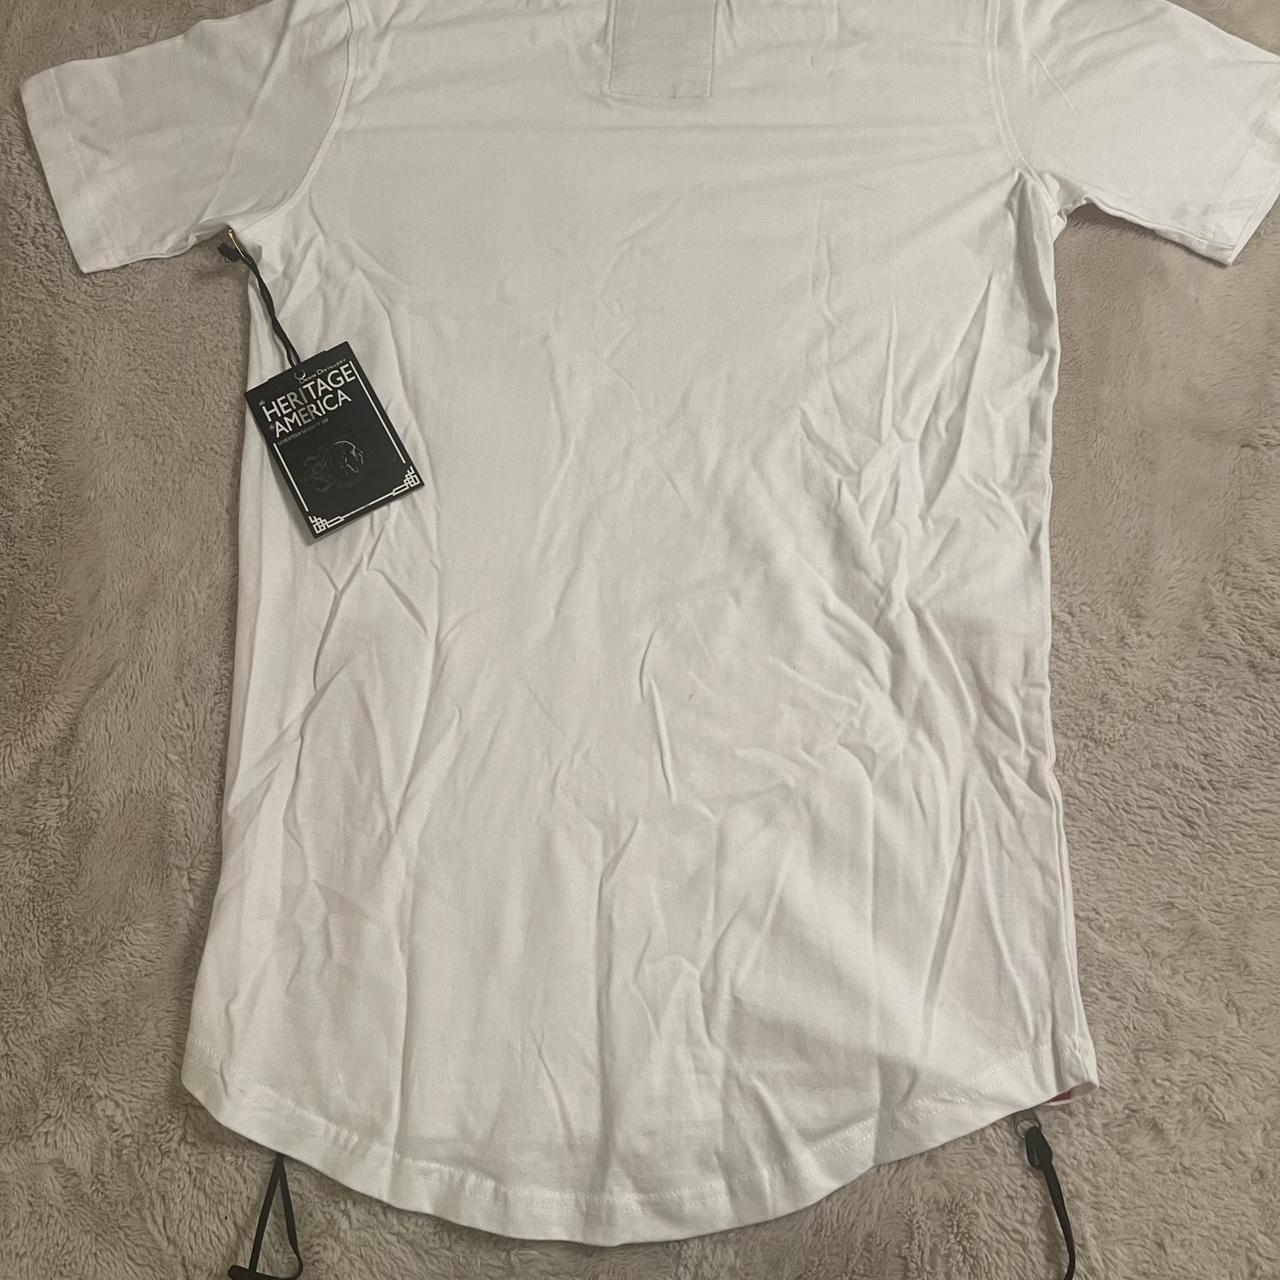 American Heritage Textiles Men's White T-shirt (2)